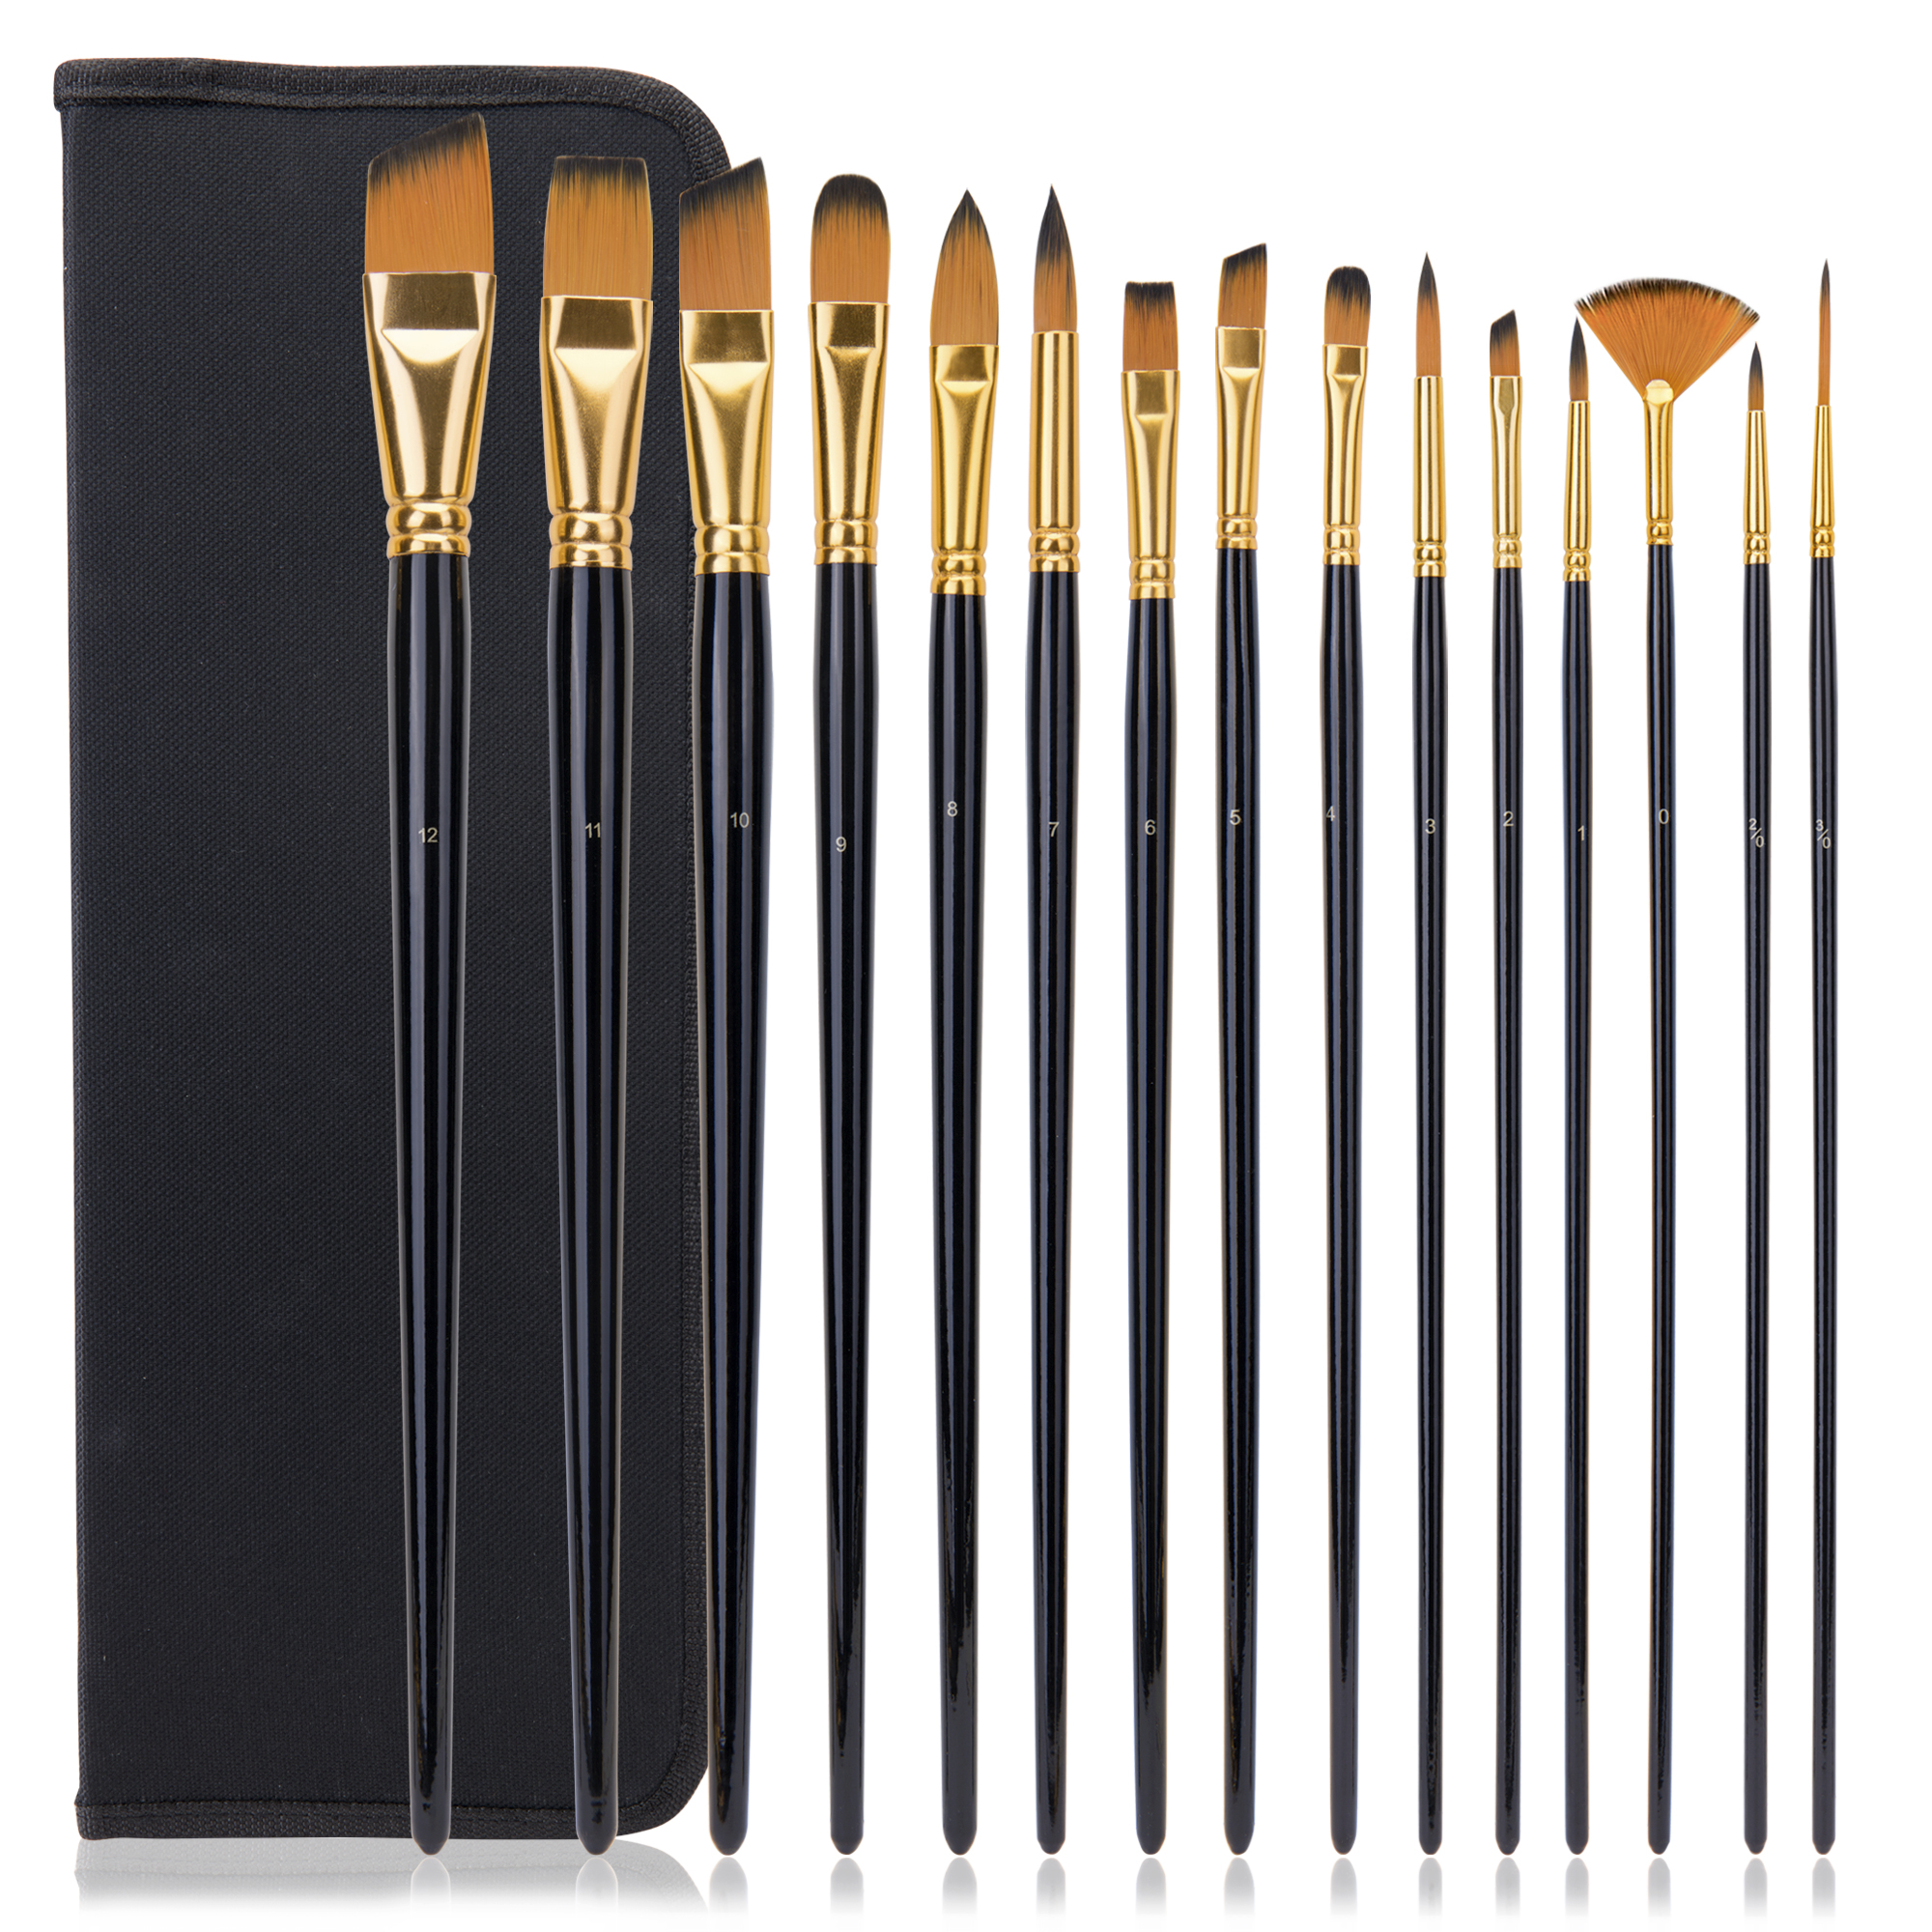 Professional China Paint Brushes For Acrylic Paint - 15pcs/set Different Brush Shapes Black Long Handle Acrylic Paint Brush Set – Fontainebleau